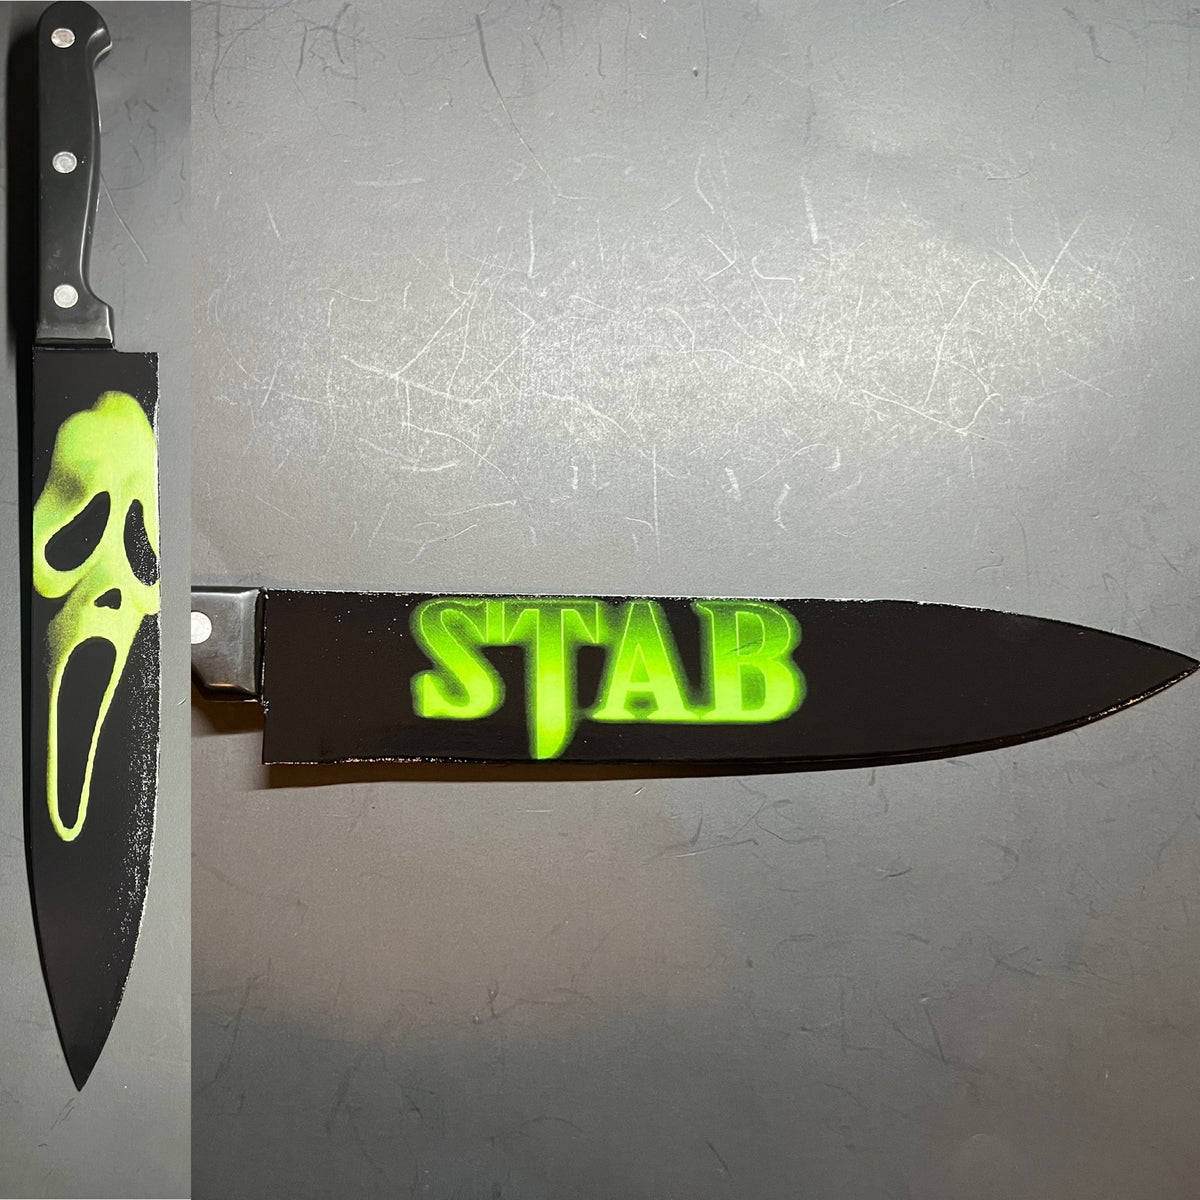 Scream 1-5 & Stab Knife Set – Dead Dave Designs